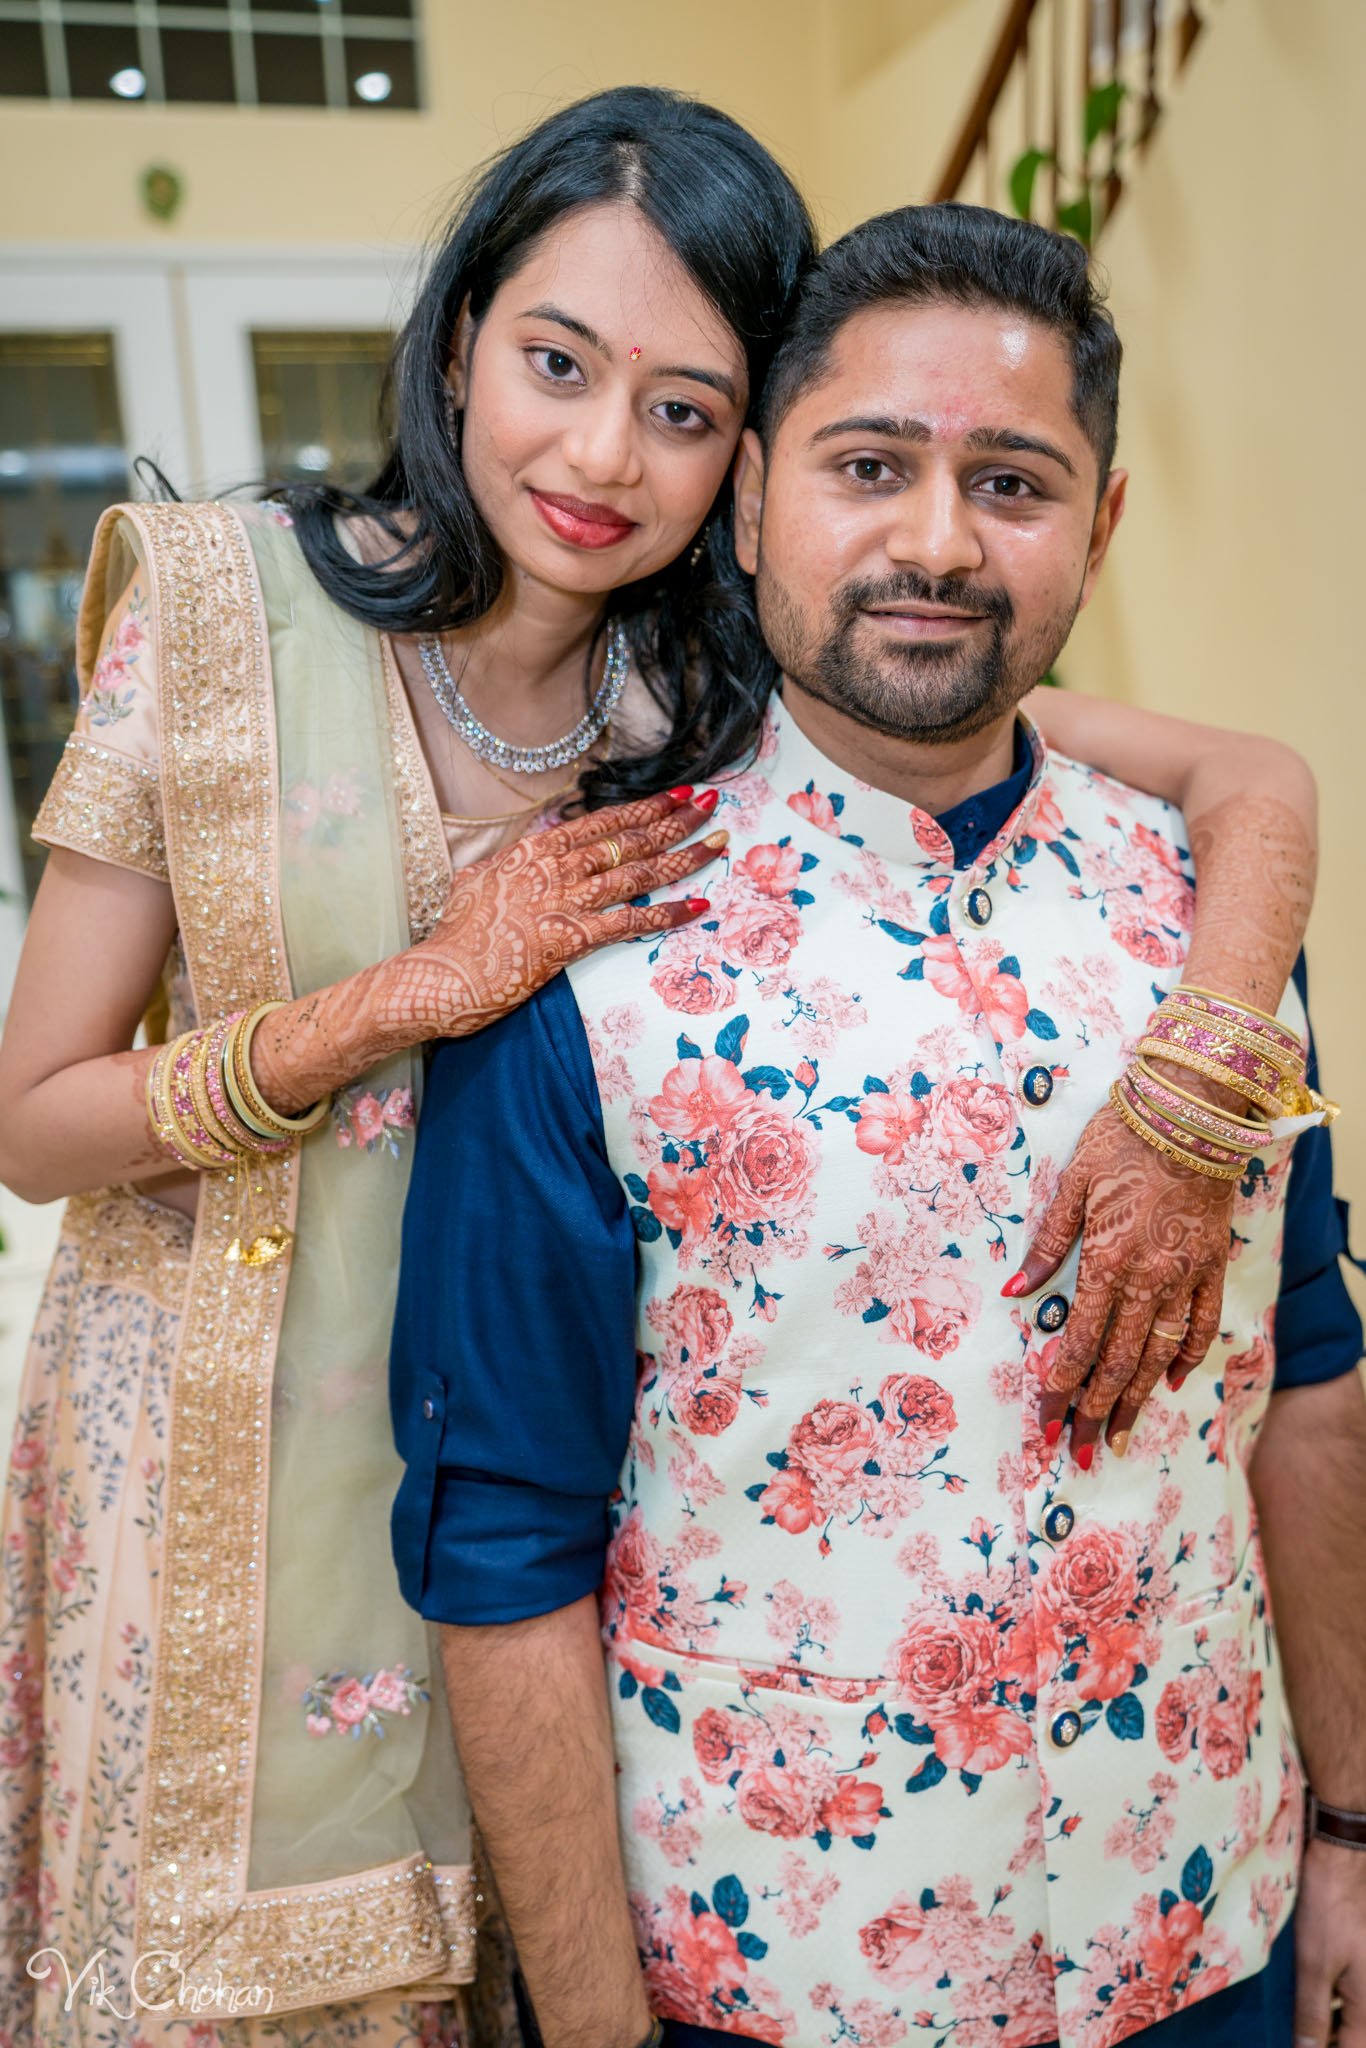 2022-02-04-Hely-&-Parth-Garba-Night-Indian-Wedding-Vik-Chohan-Photography-Photo-Booth-Social-Media-VCP-057.jpg